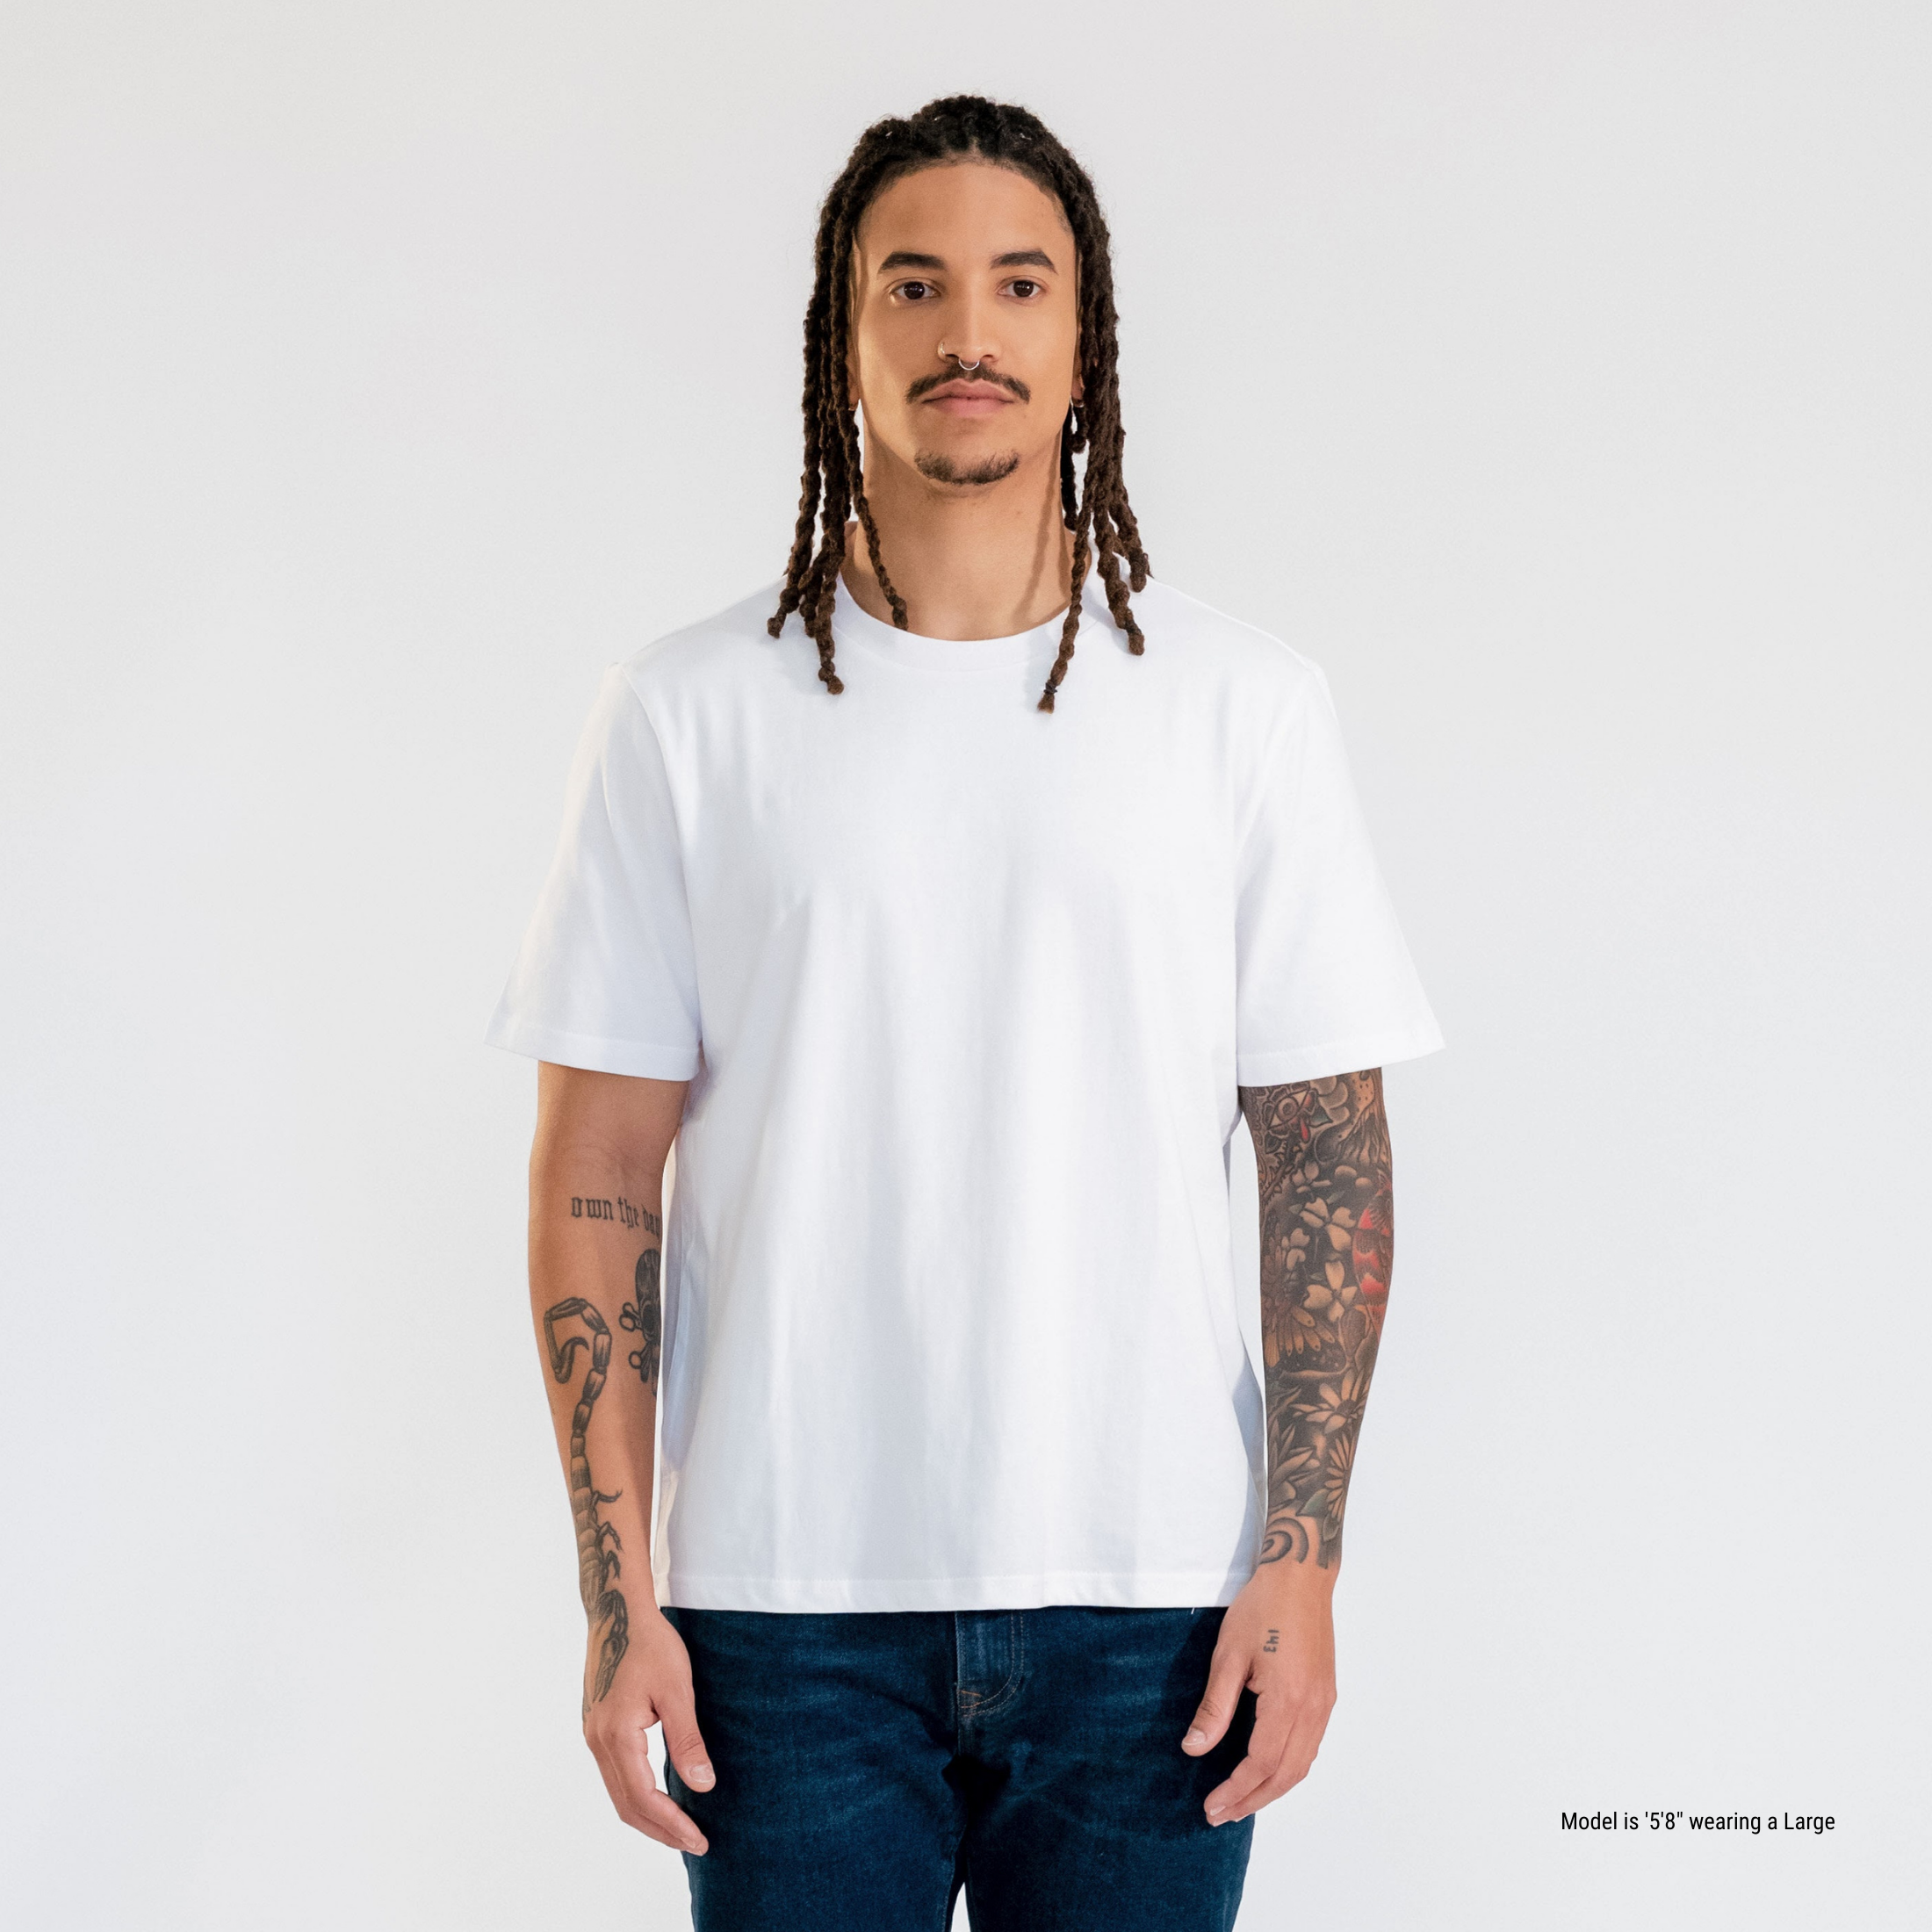 Sleeve Crew Neck T-Shirt for Shorter Men Abbreviated Apparel